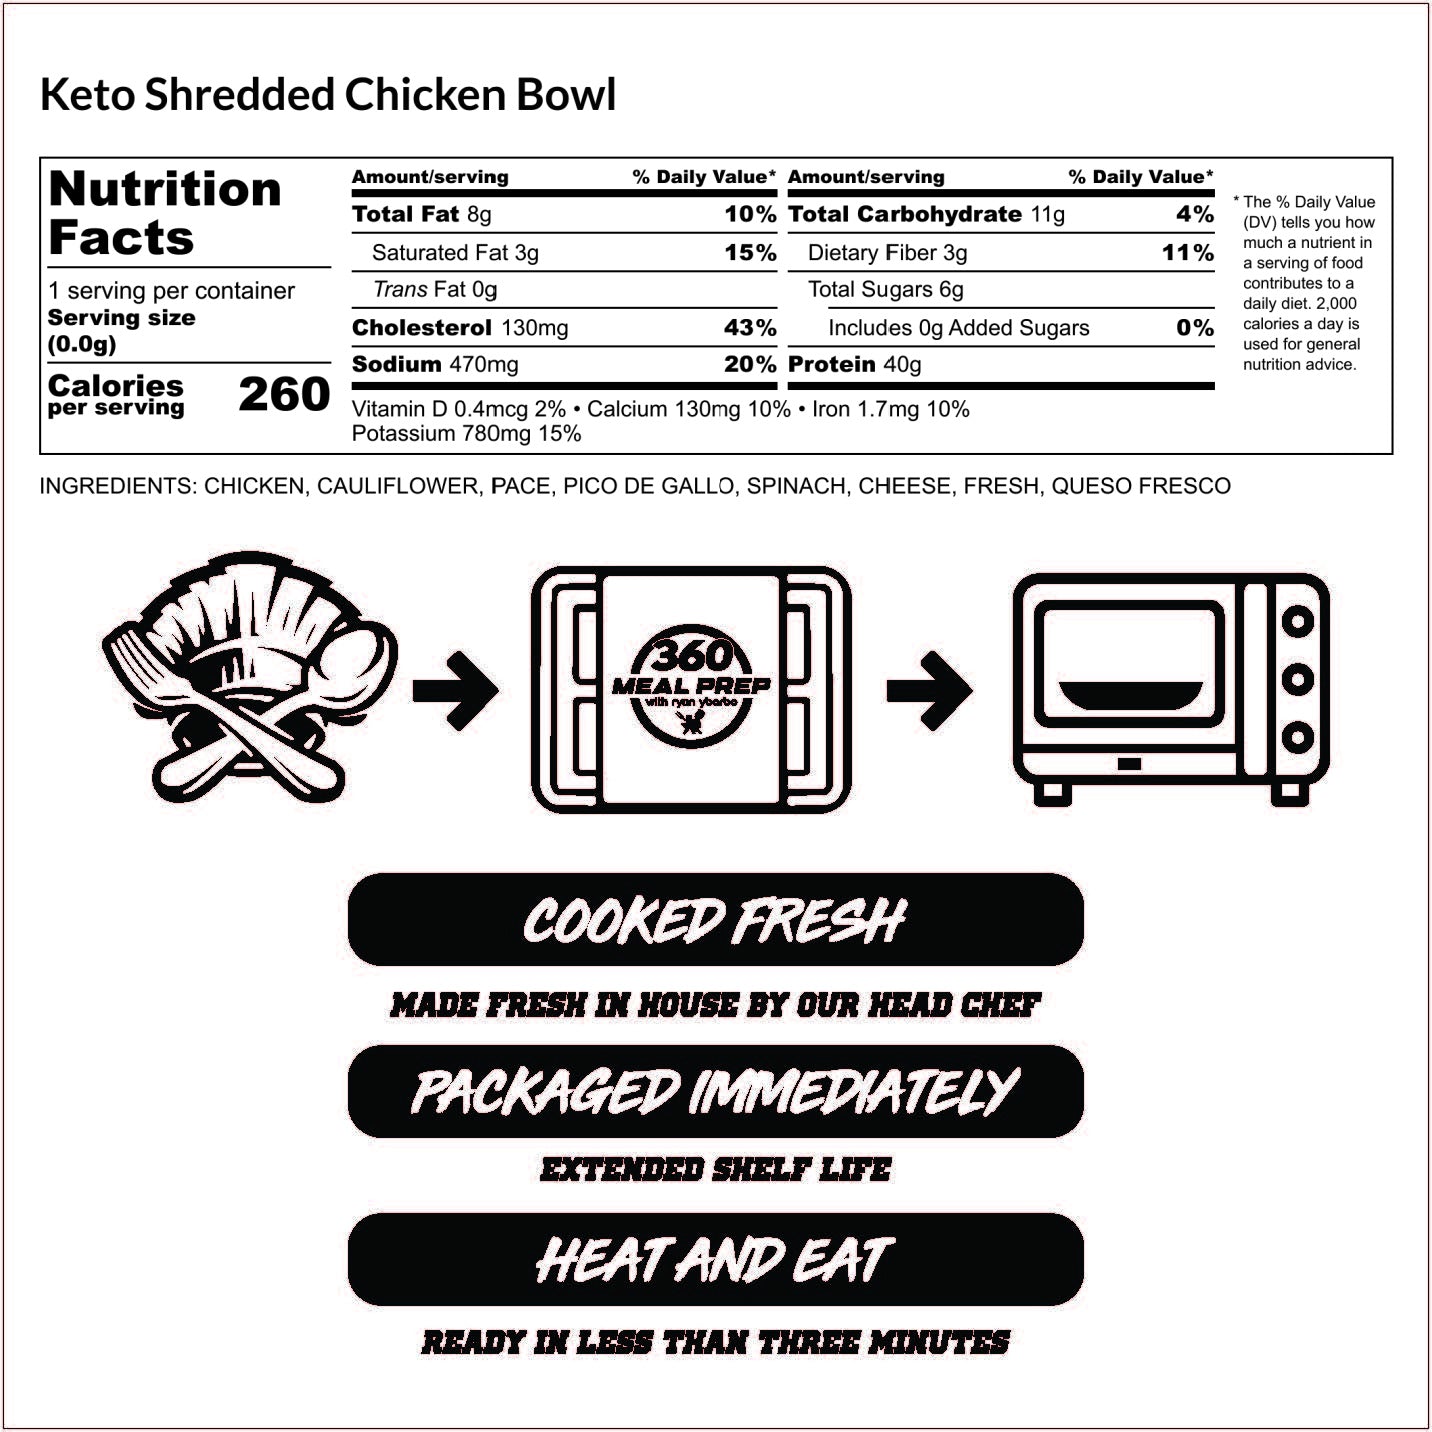 Shredded Chicken Keto Bowl